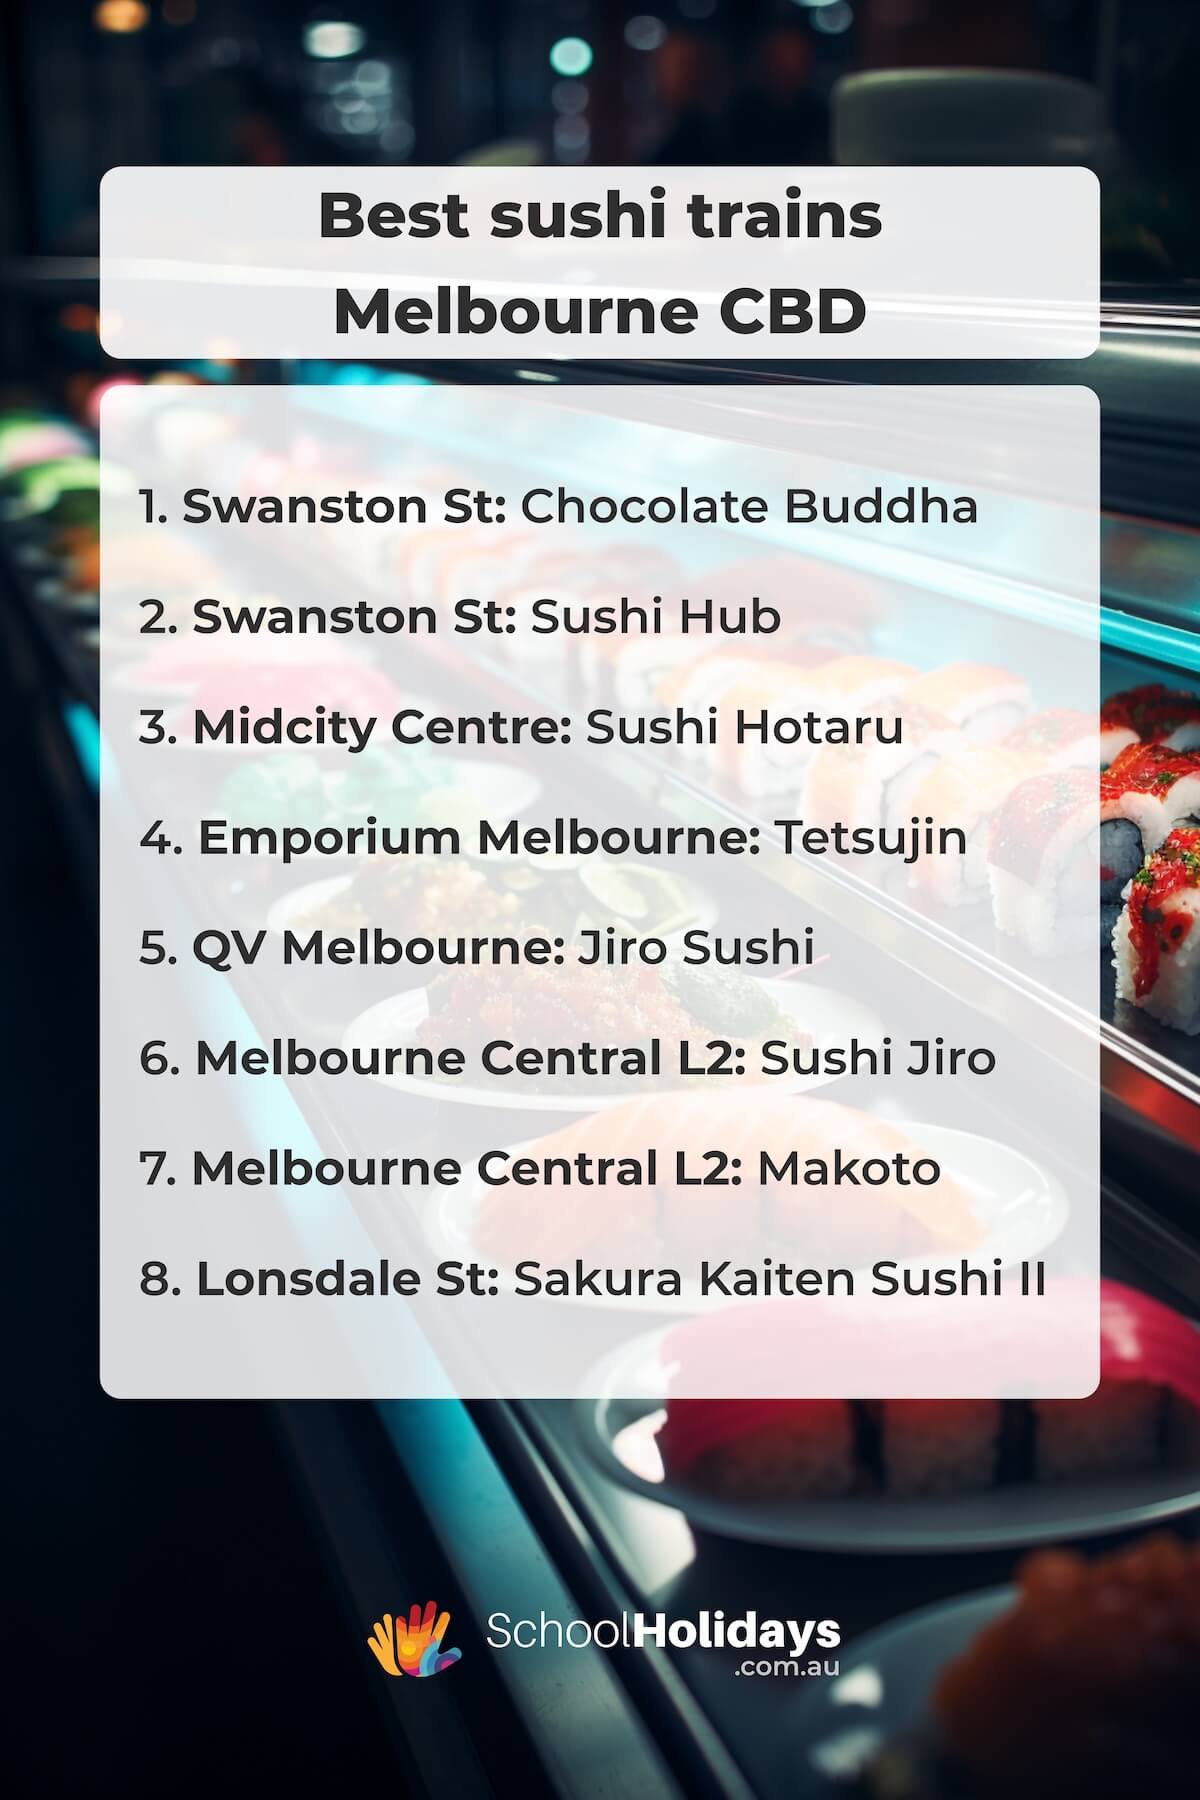 List of Sushi trains in Melbourne CBD.